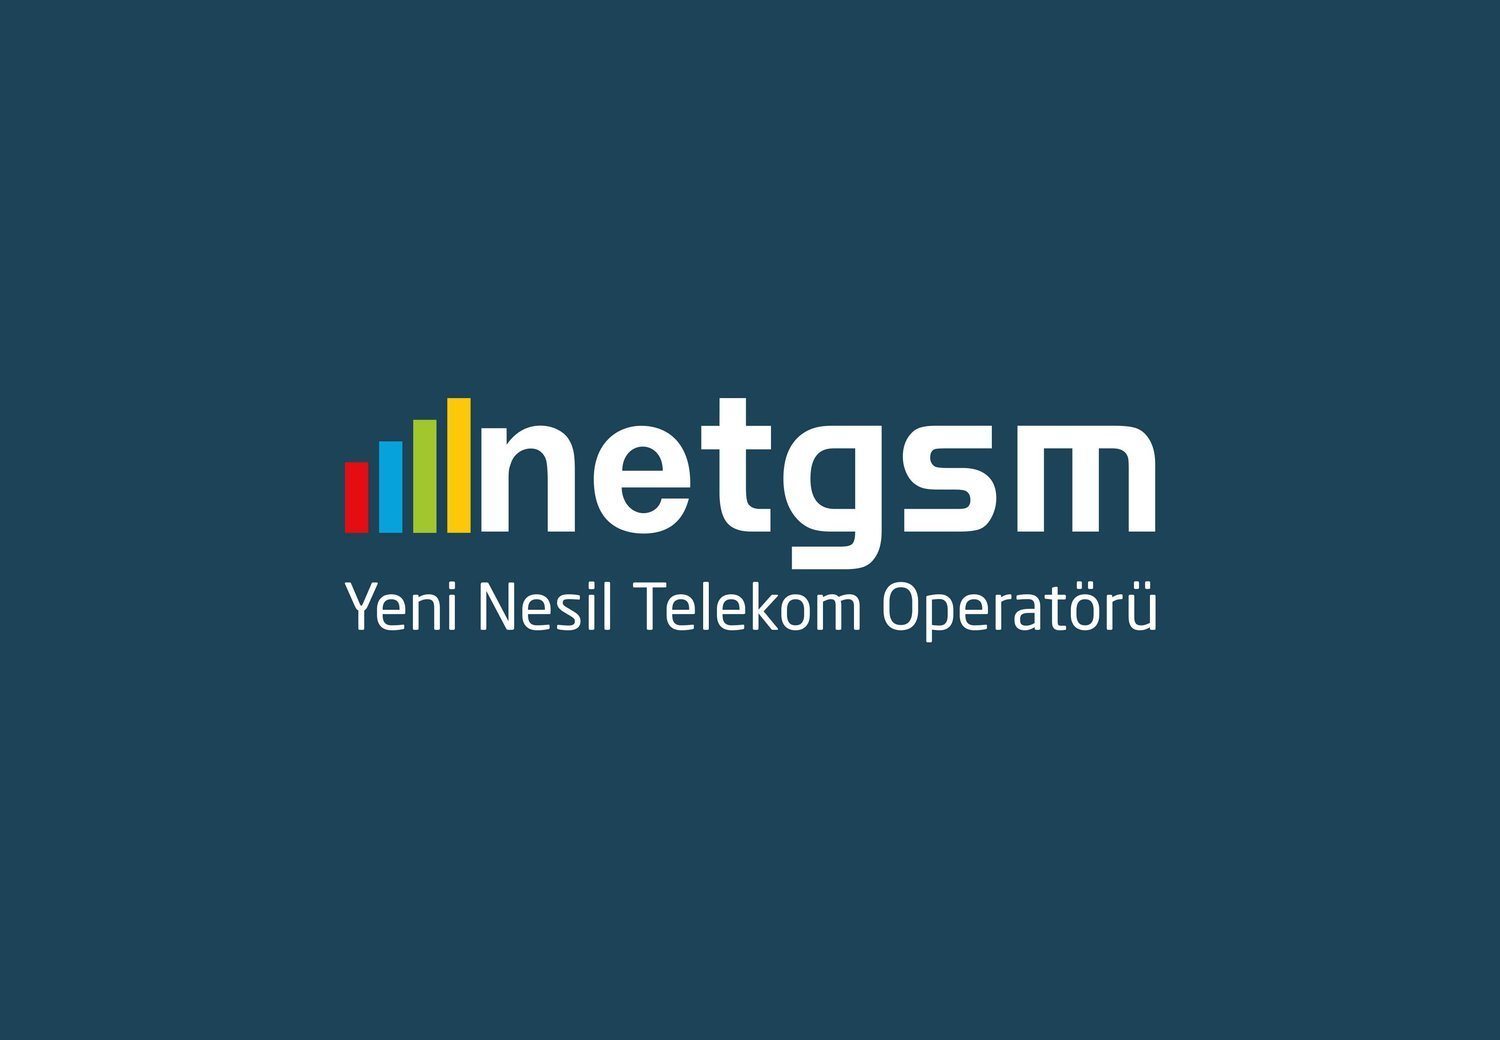 netgsm-logo-090616.jpg